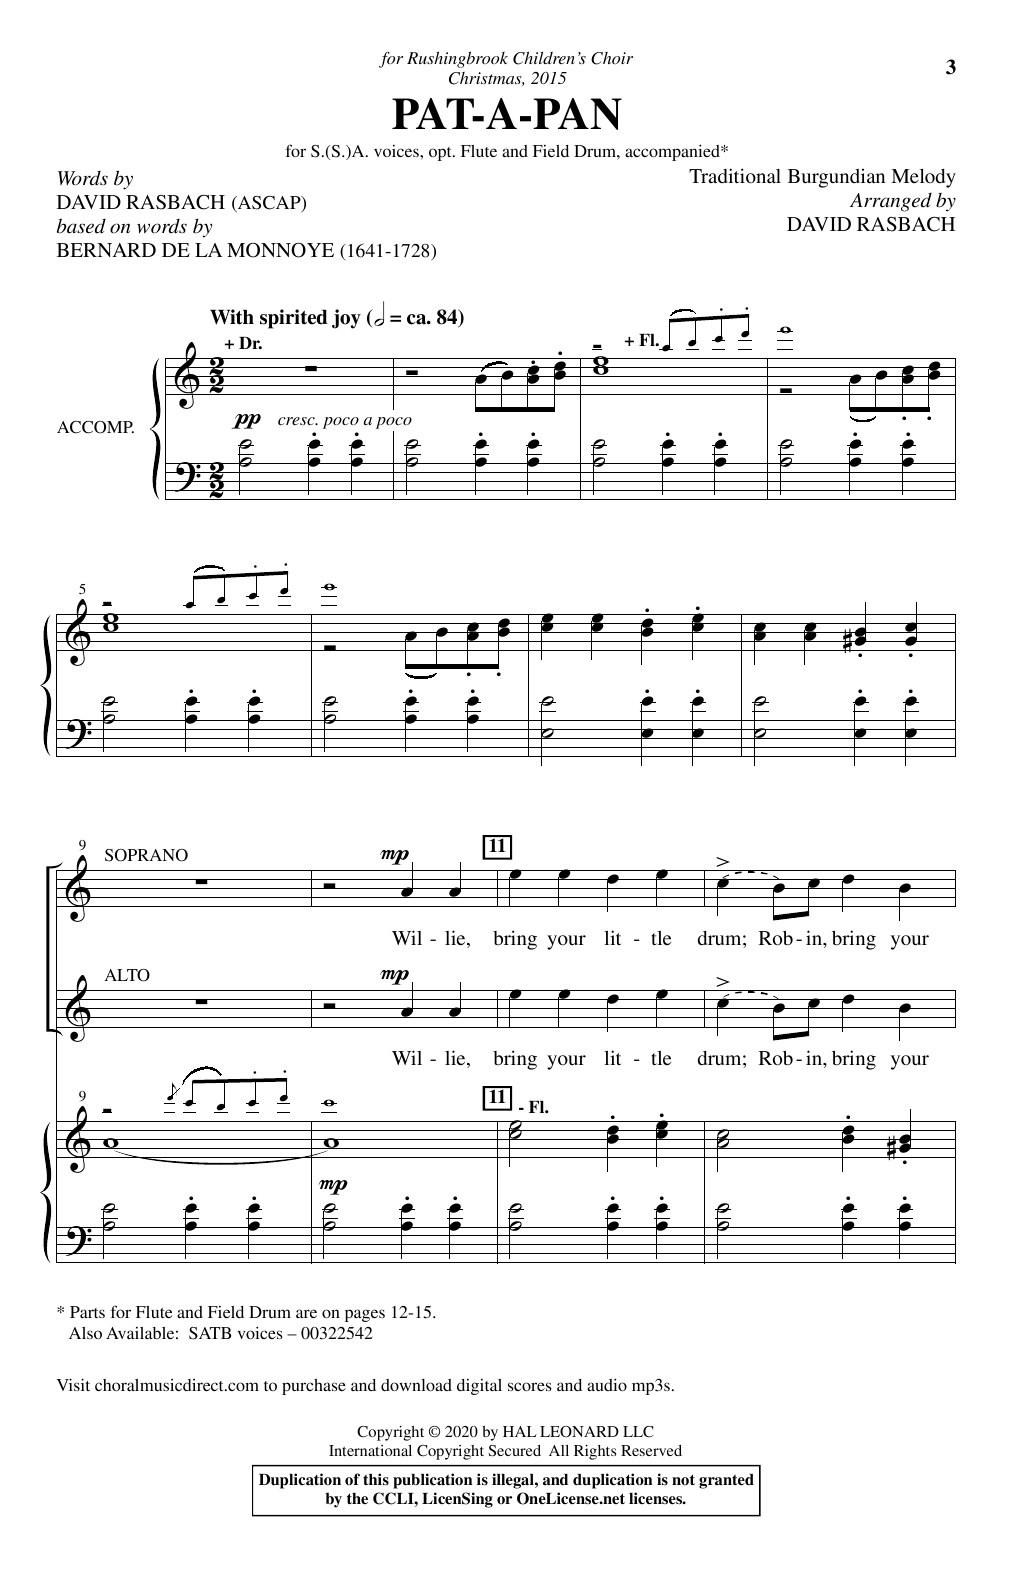 Traditional Burgundian Melody Pat-A-Pan (arr. David Rasbach) sheet music notes and chords arranged for SATB Choir